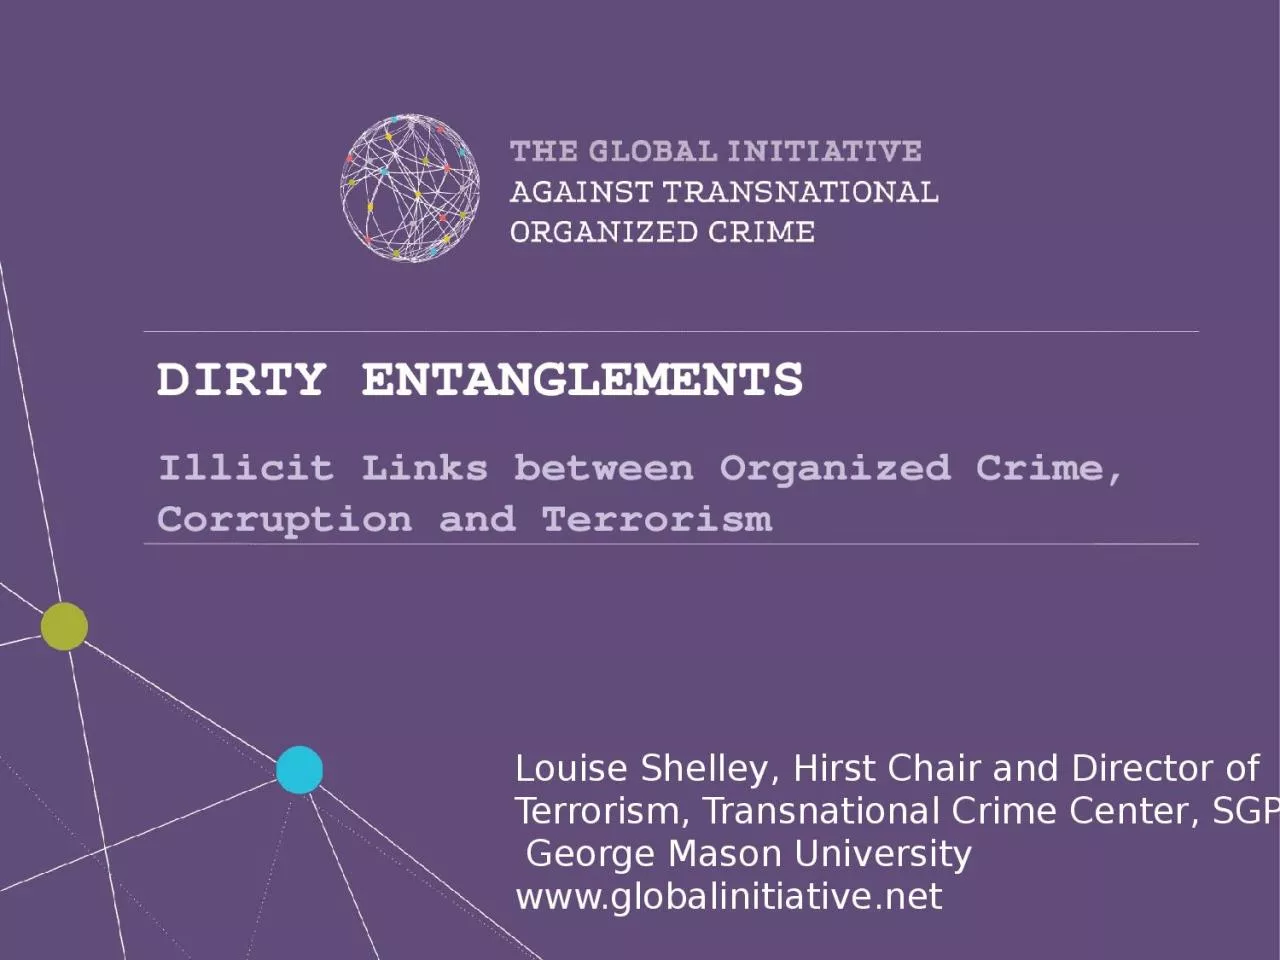 DIRTY ENTANGLEMENTS  Illicit Links between Organized